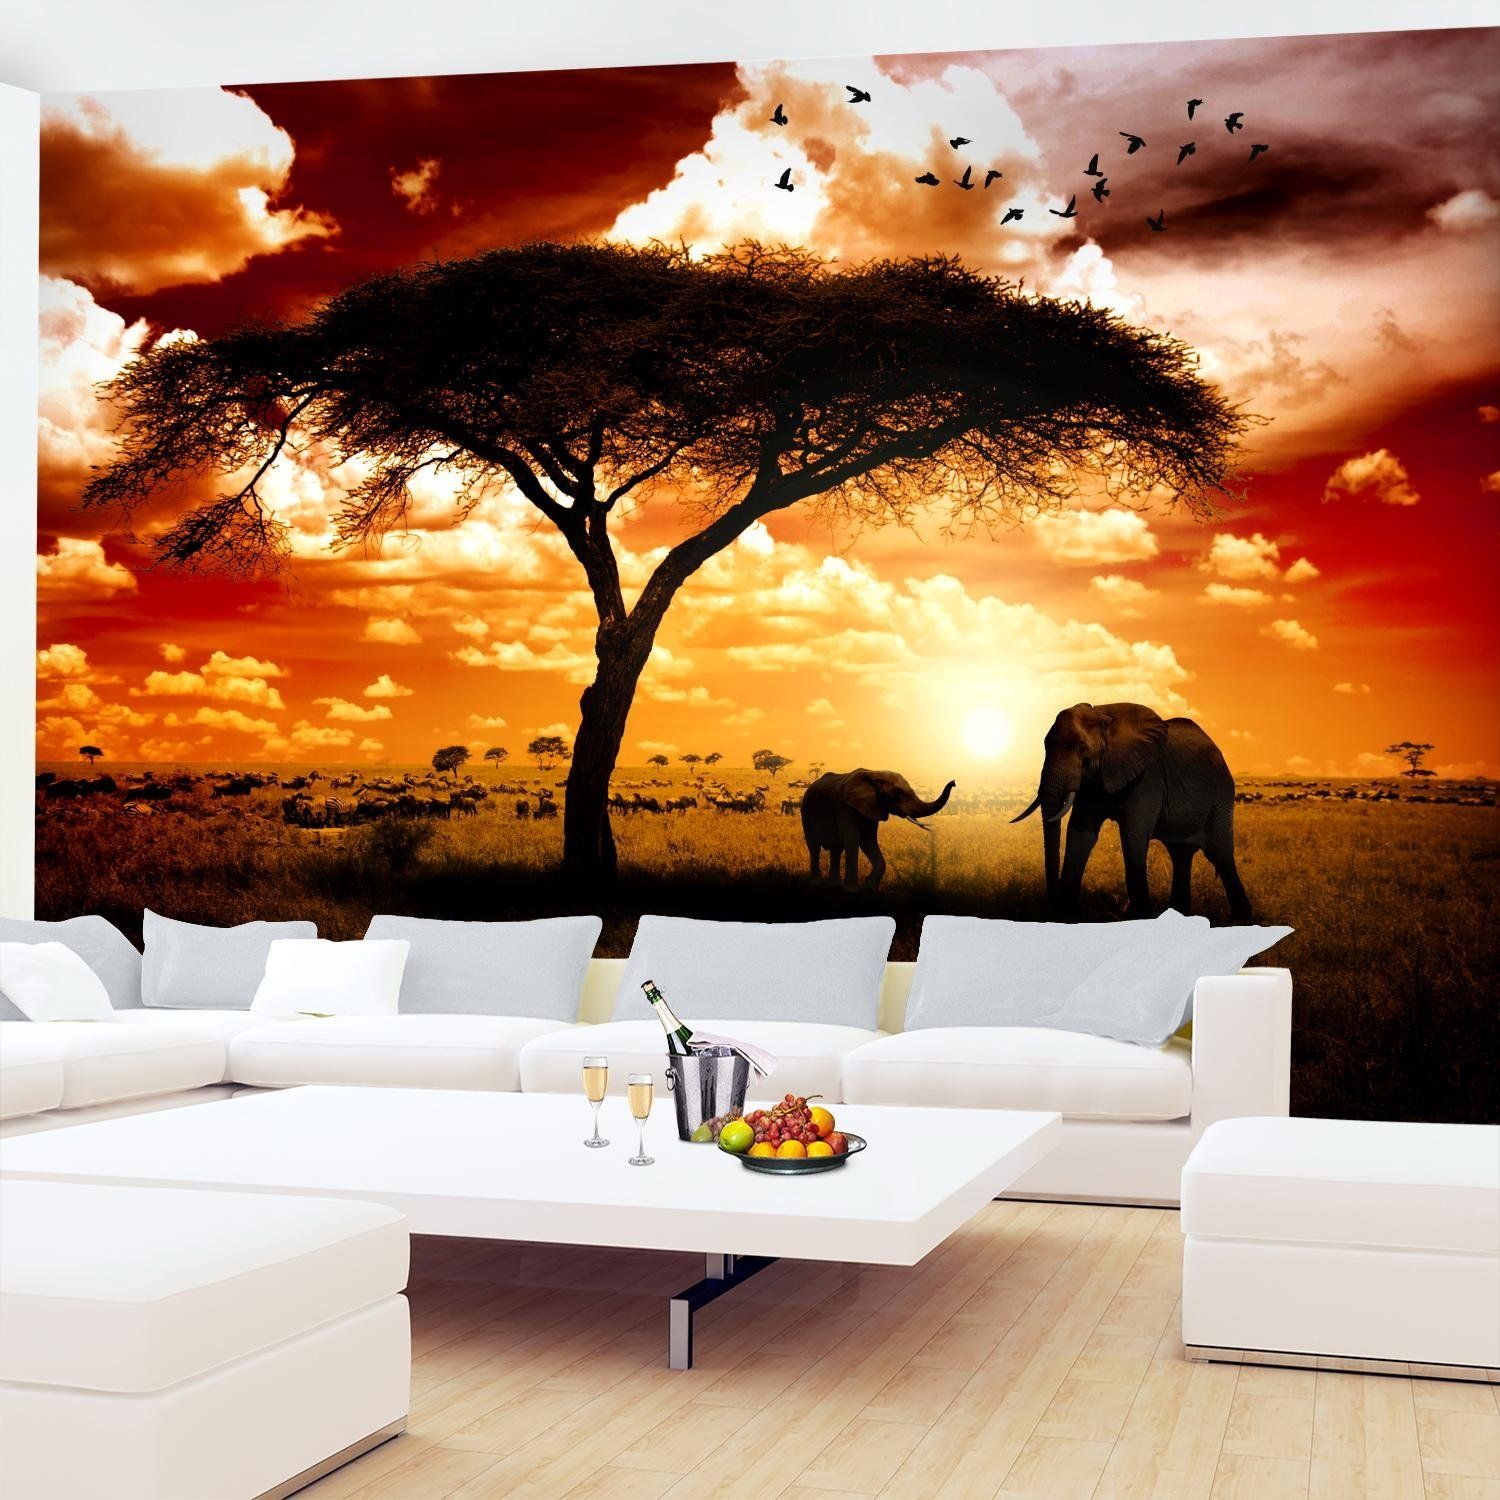 Wanddeko Garten Best Of Fototapete Afrika Elefanten 396 X 280 Cm Vlies Wand Tapete